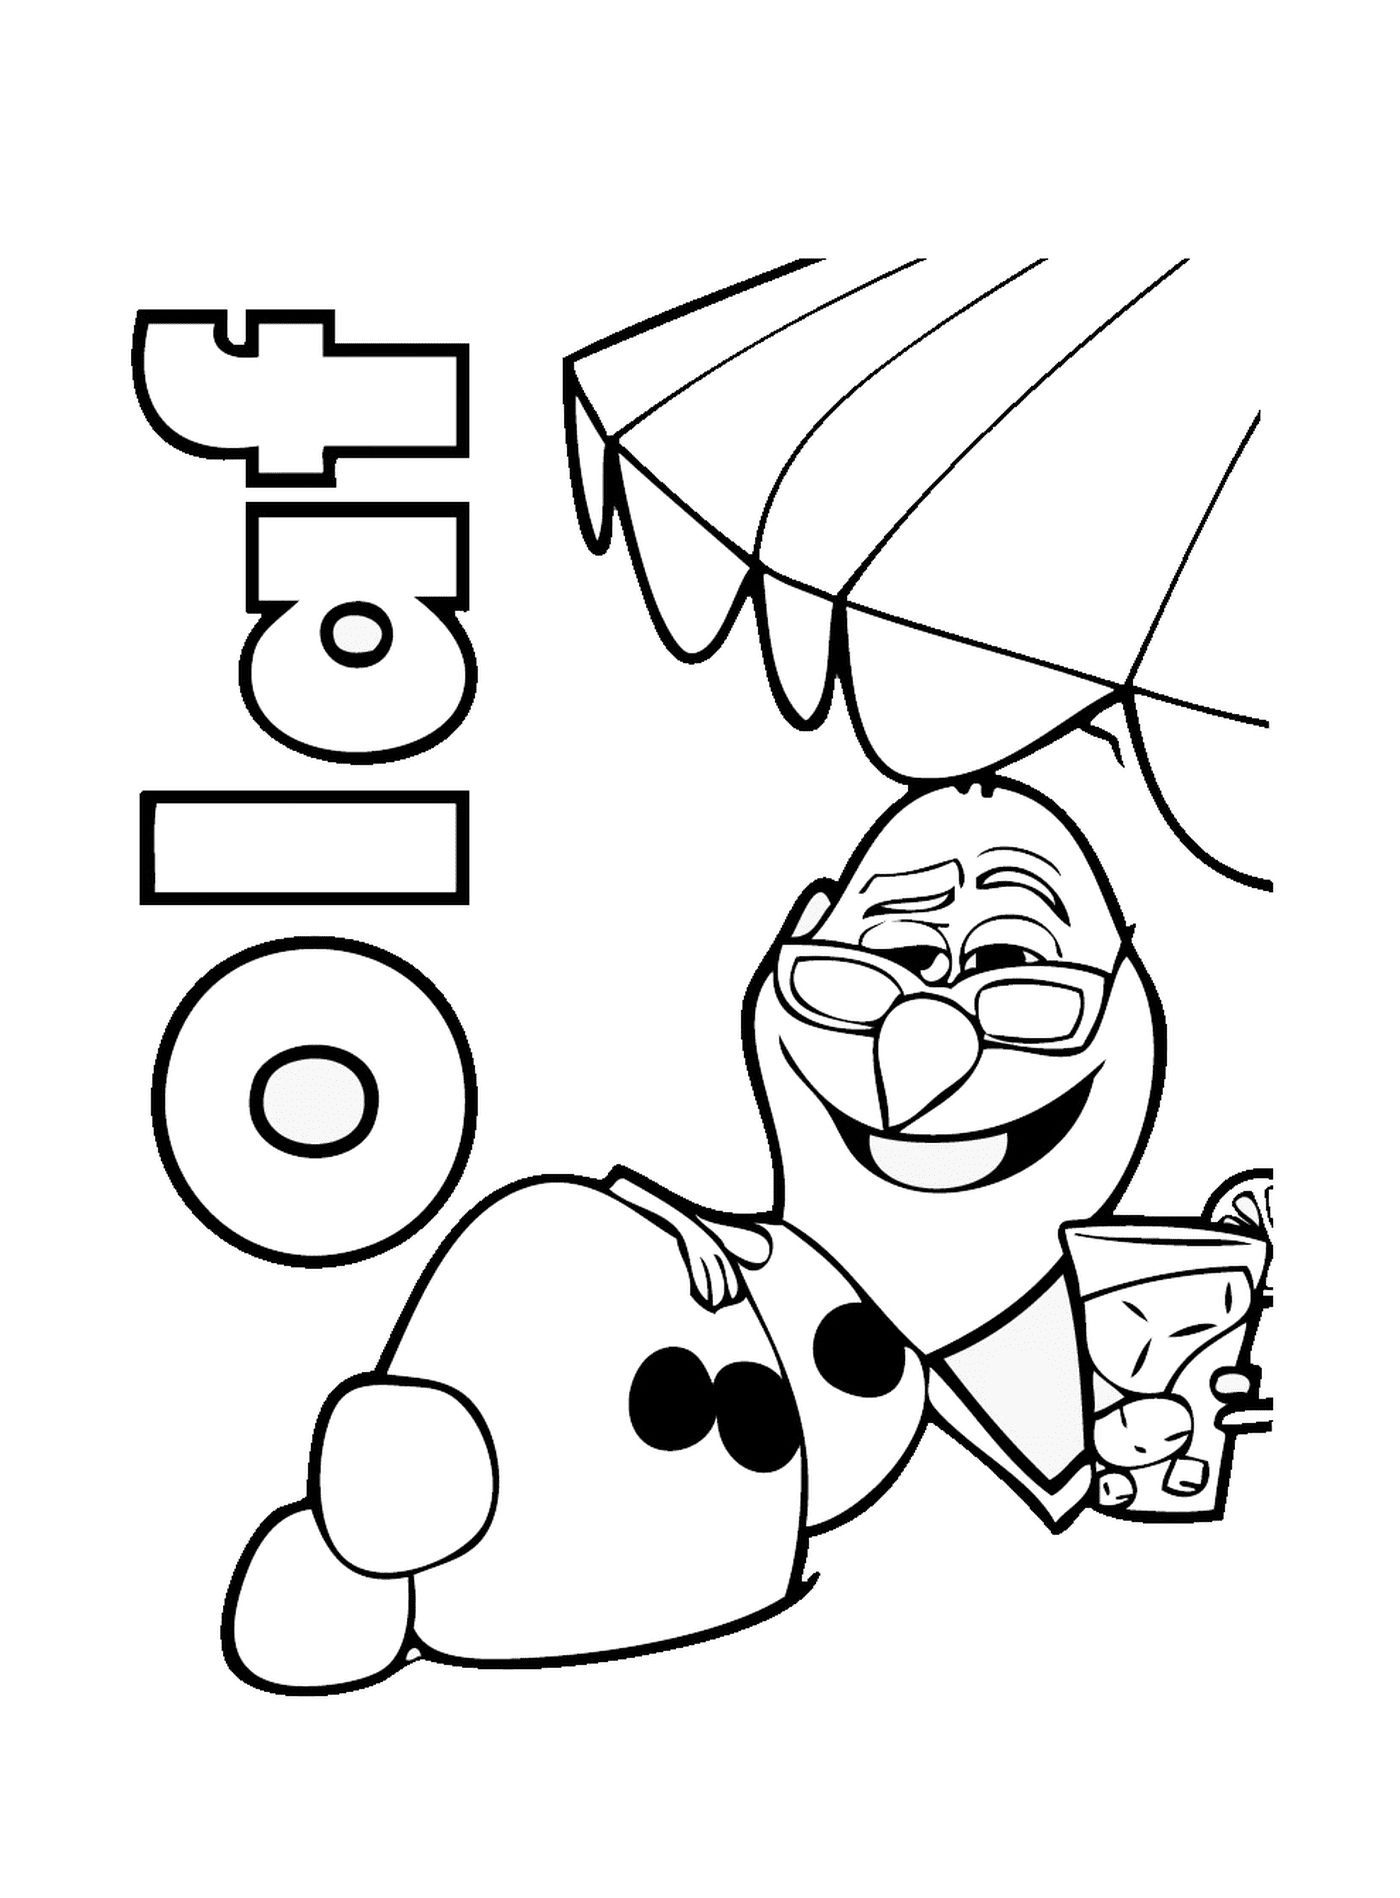  Olaf trinkt Eistee am Strand 